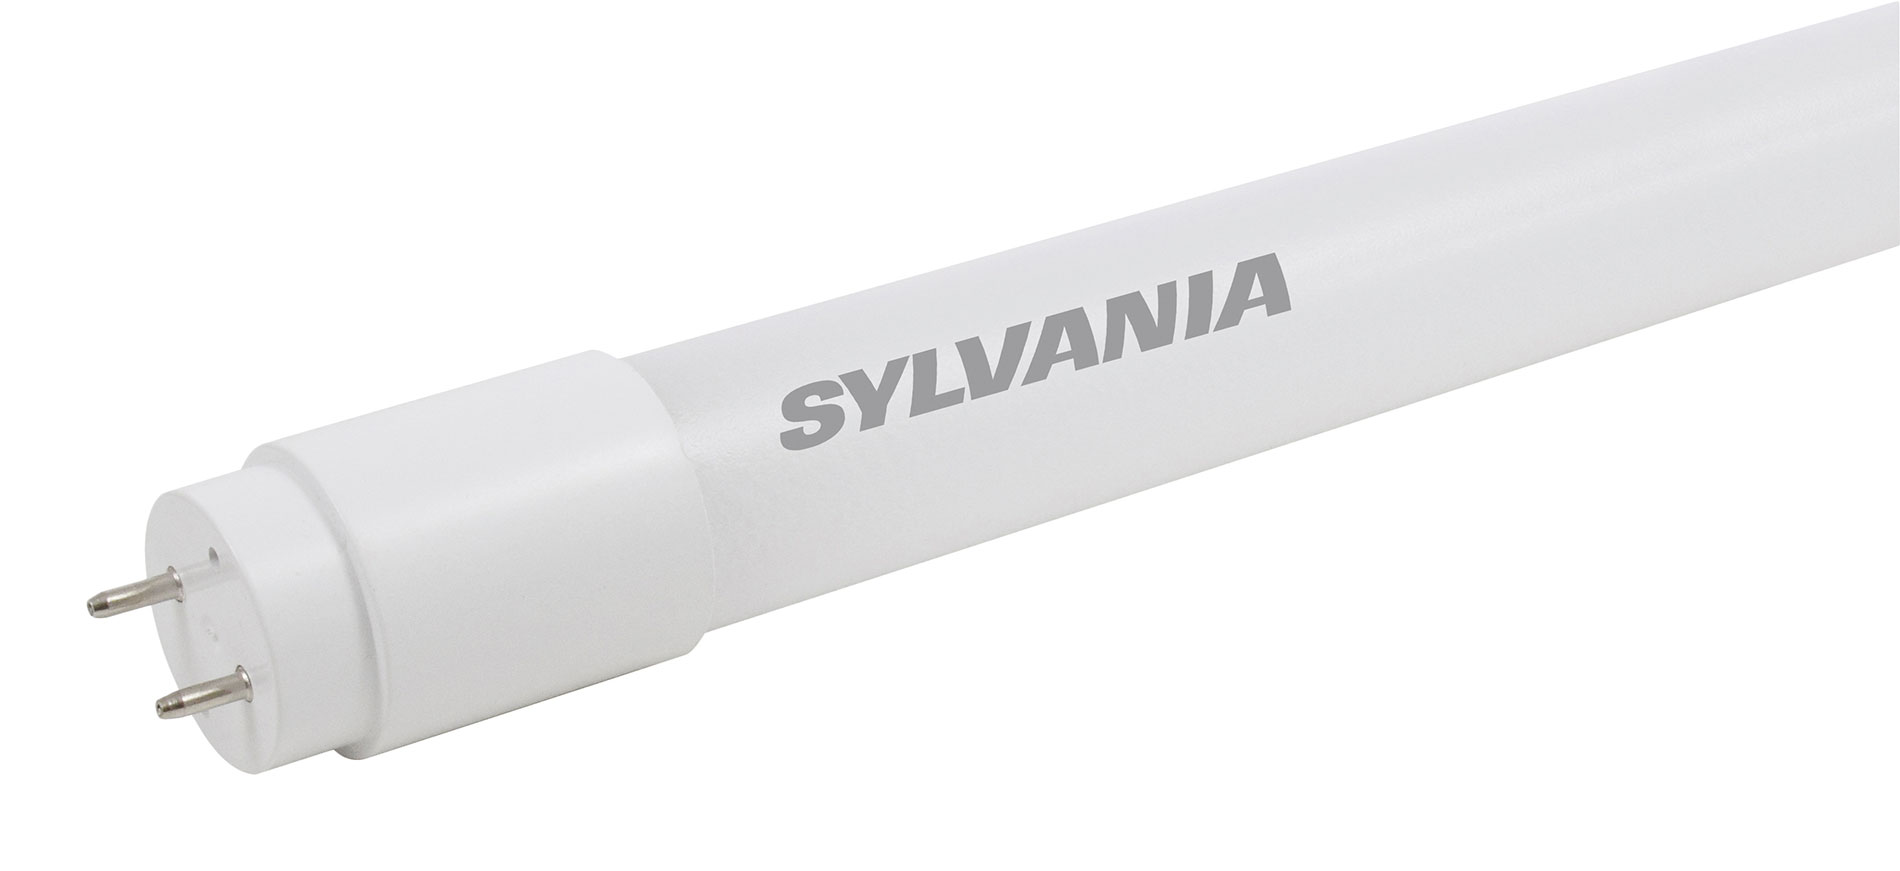 Sylvania’s SubstiTUBE IPS Natural LED T8 lamp